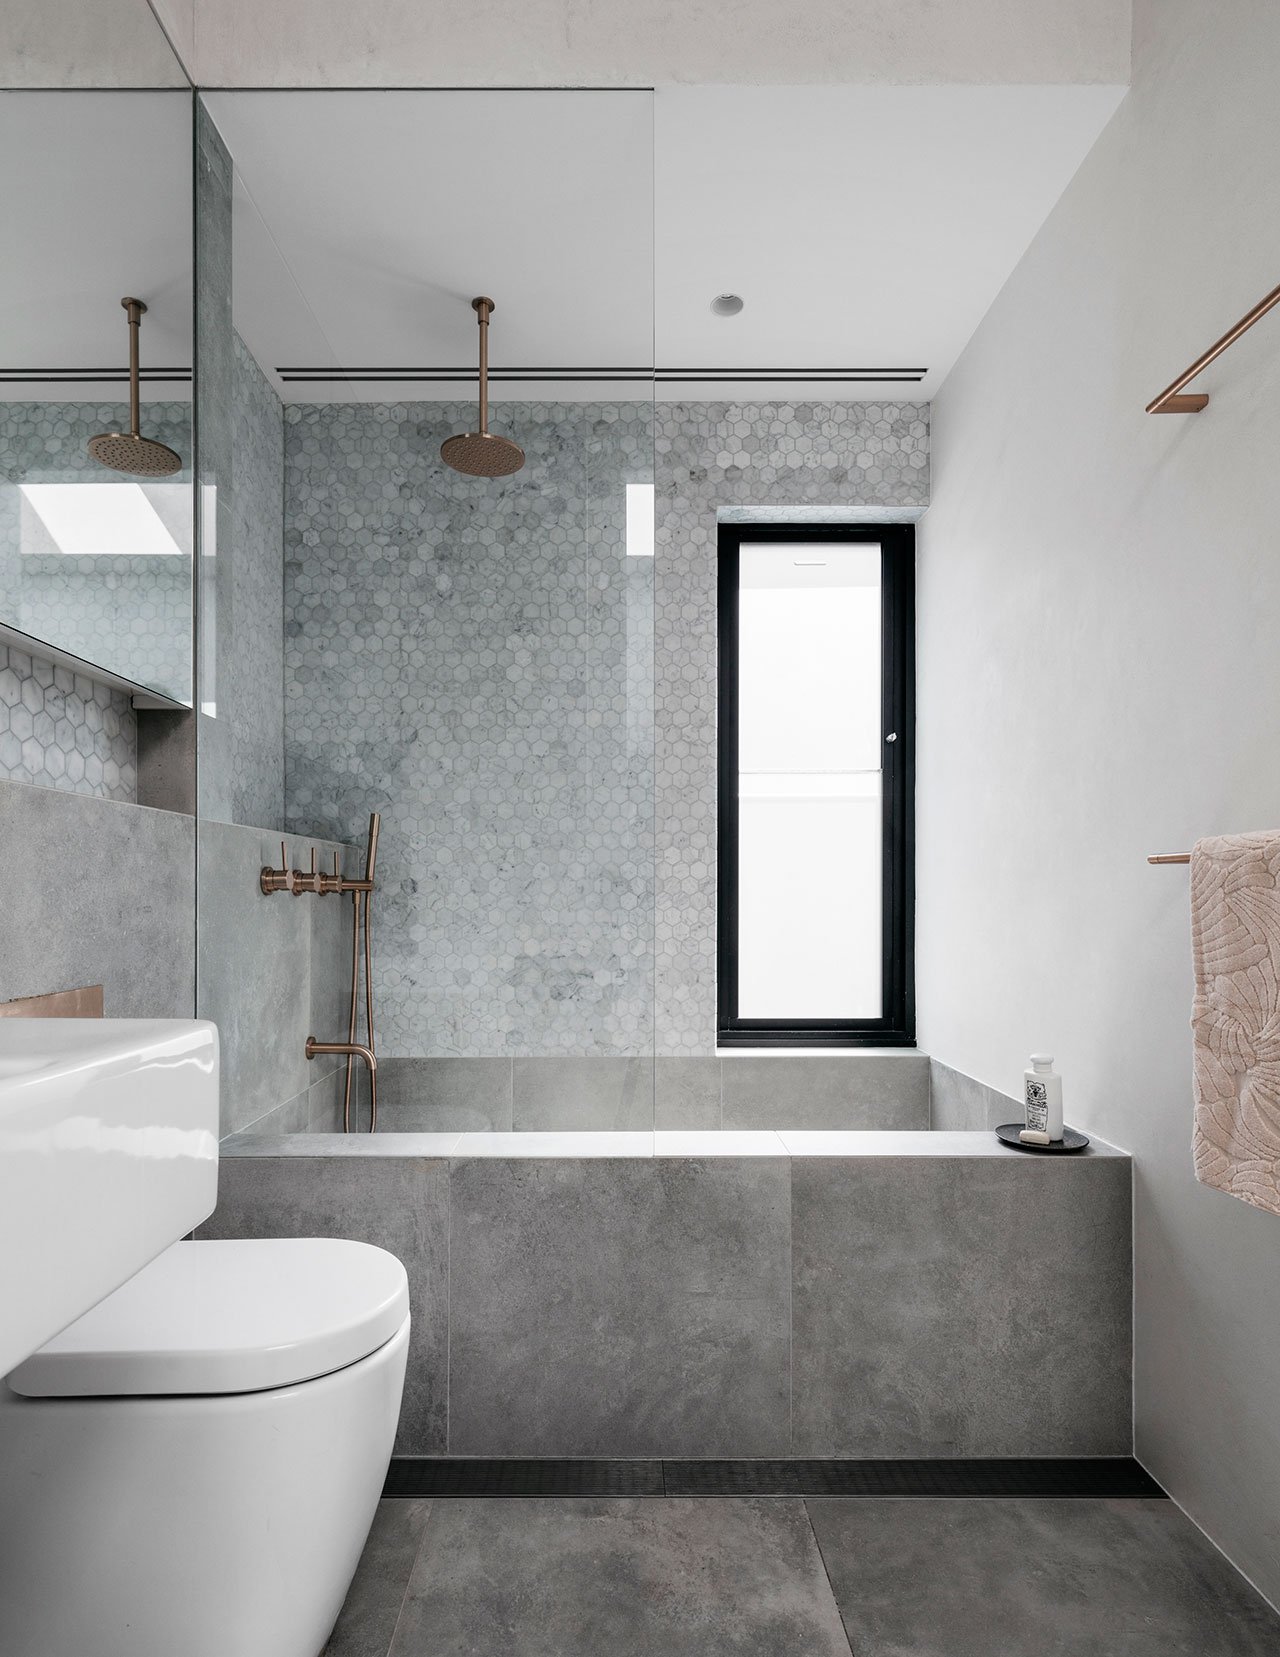 Verrassend Deze mooie kleine badkamer is ontworpen met oog voor detail | HOMEASE QP-59